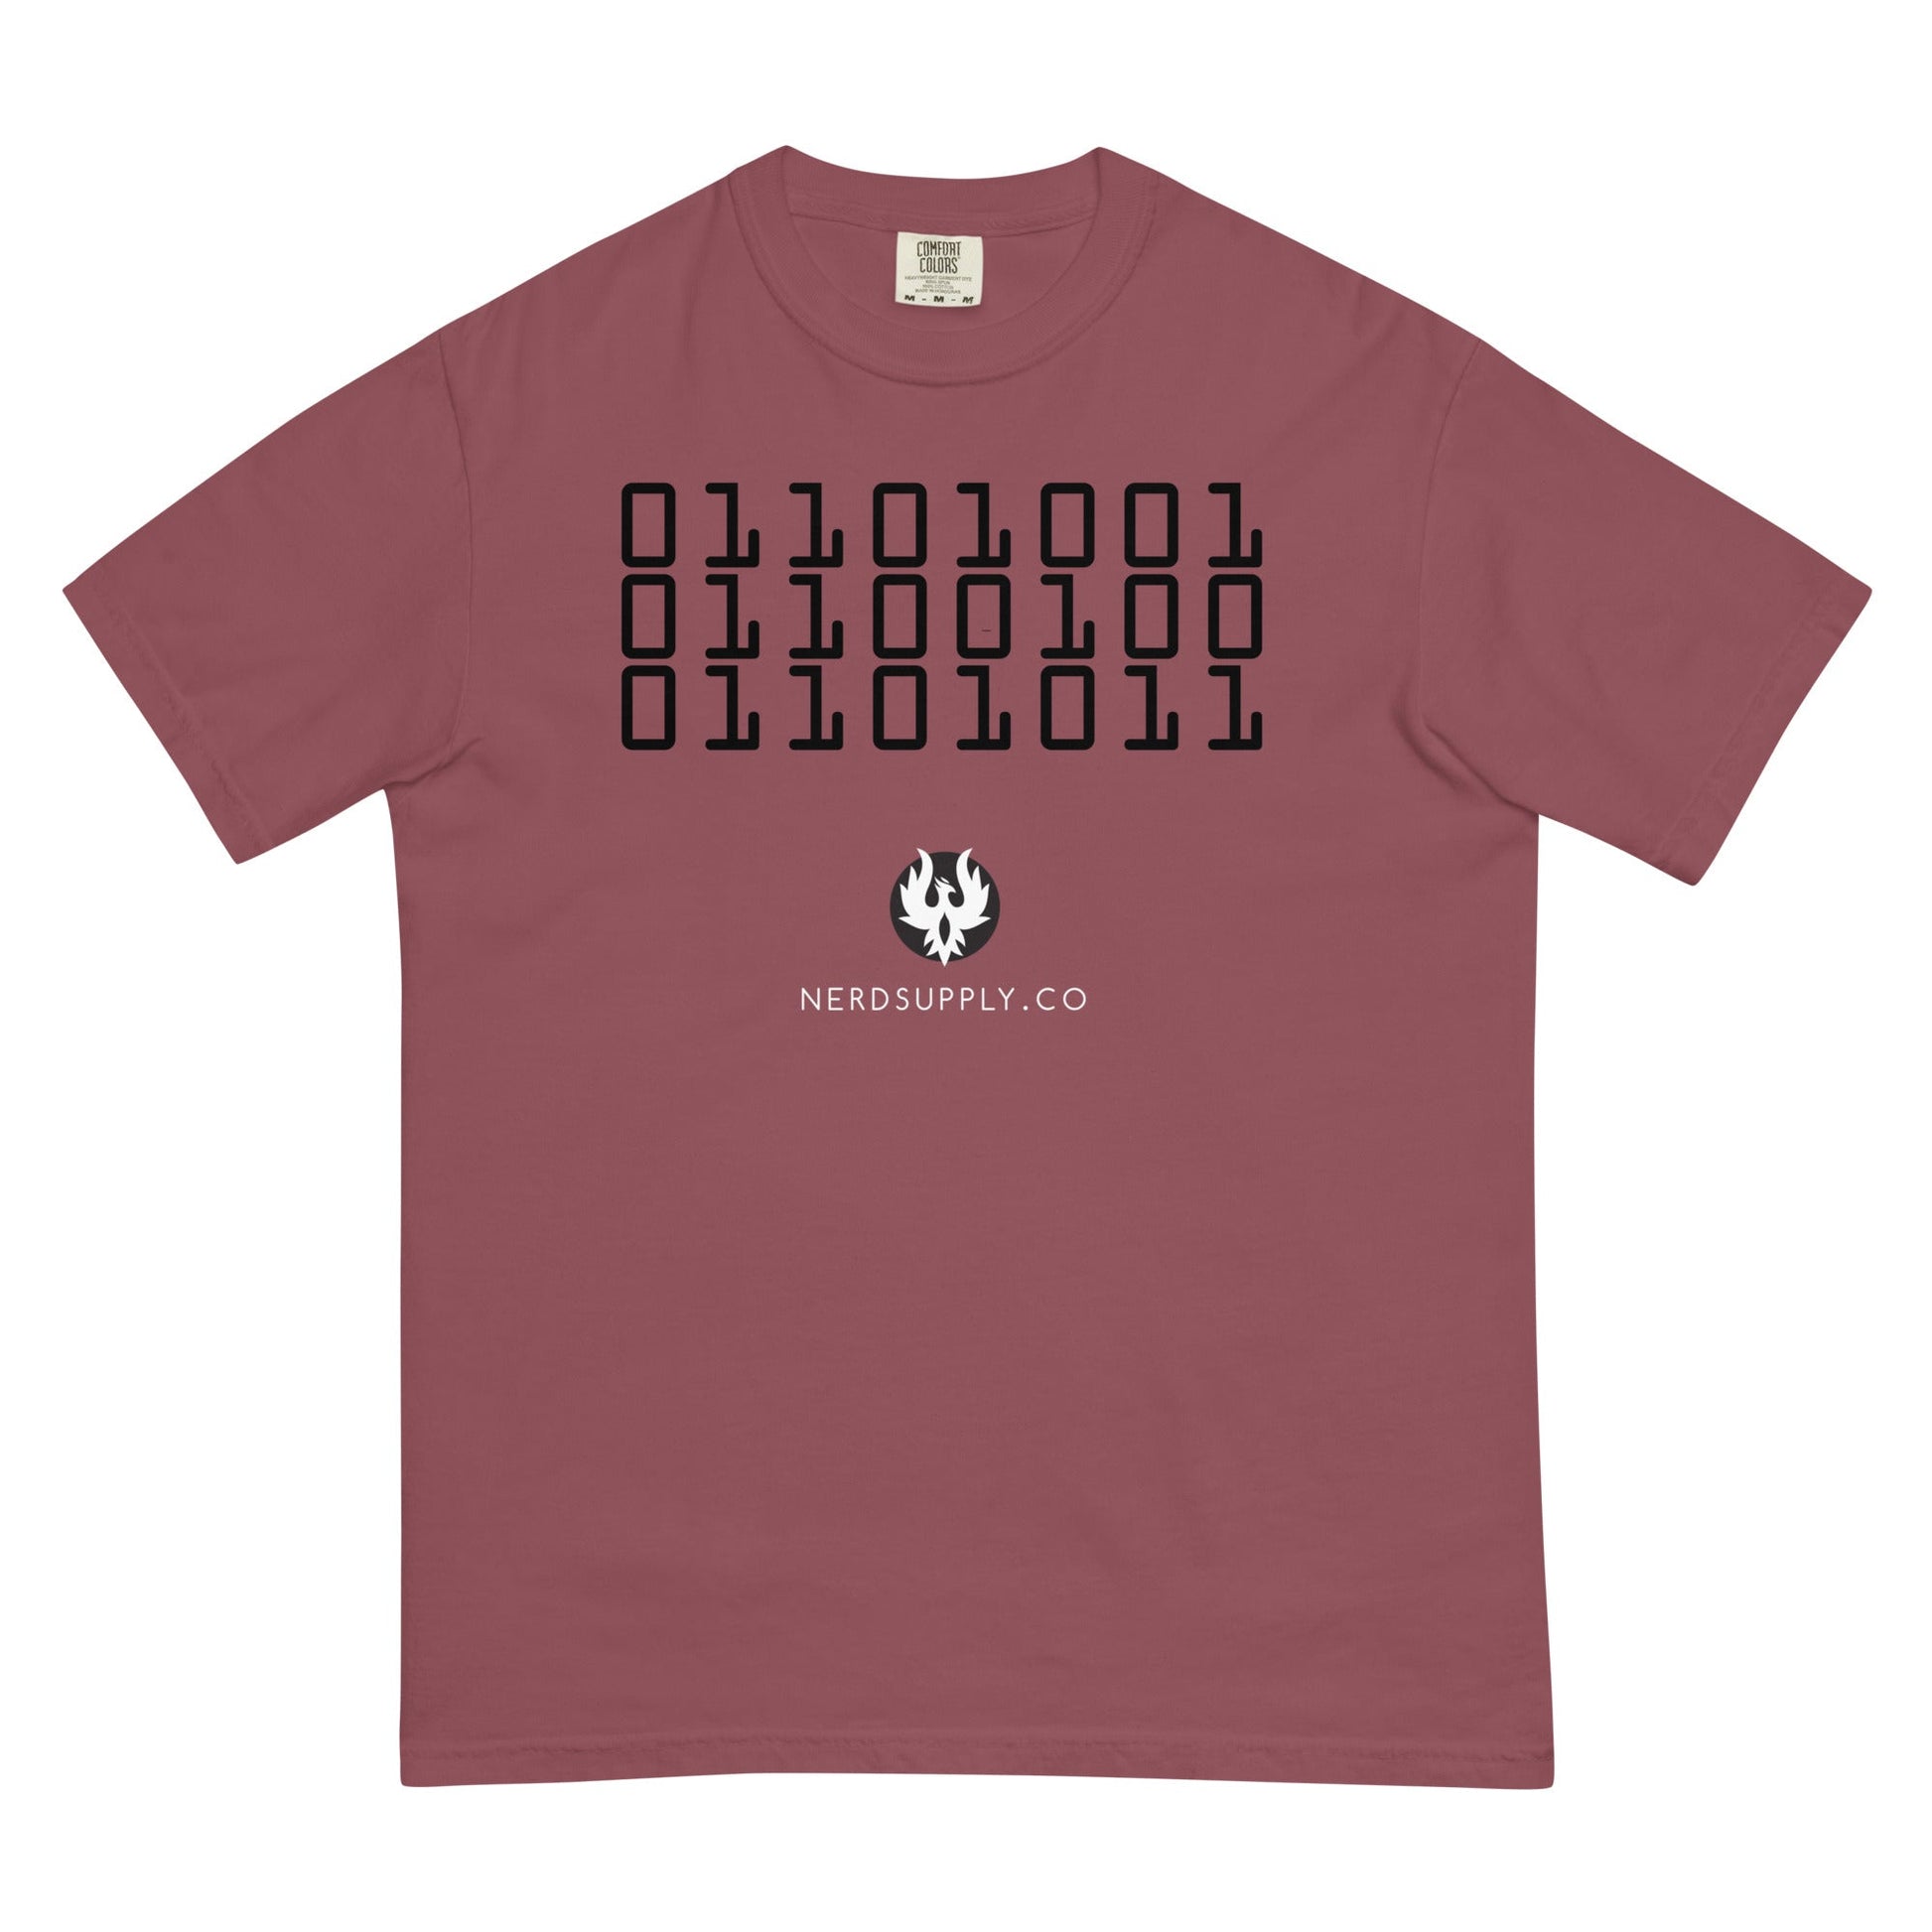 "IDK" in binary - t-shirt - The Nerd Supply Company